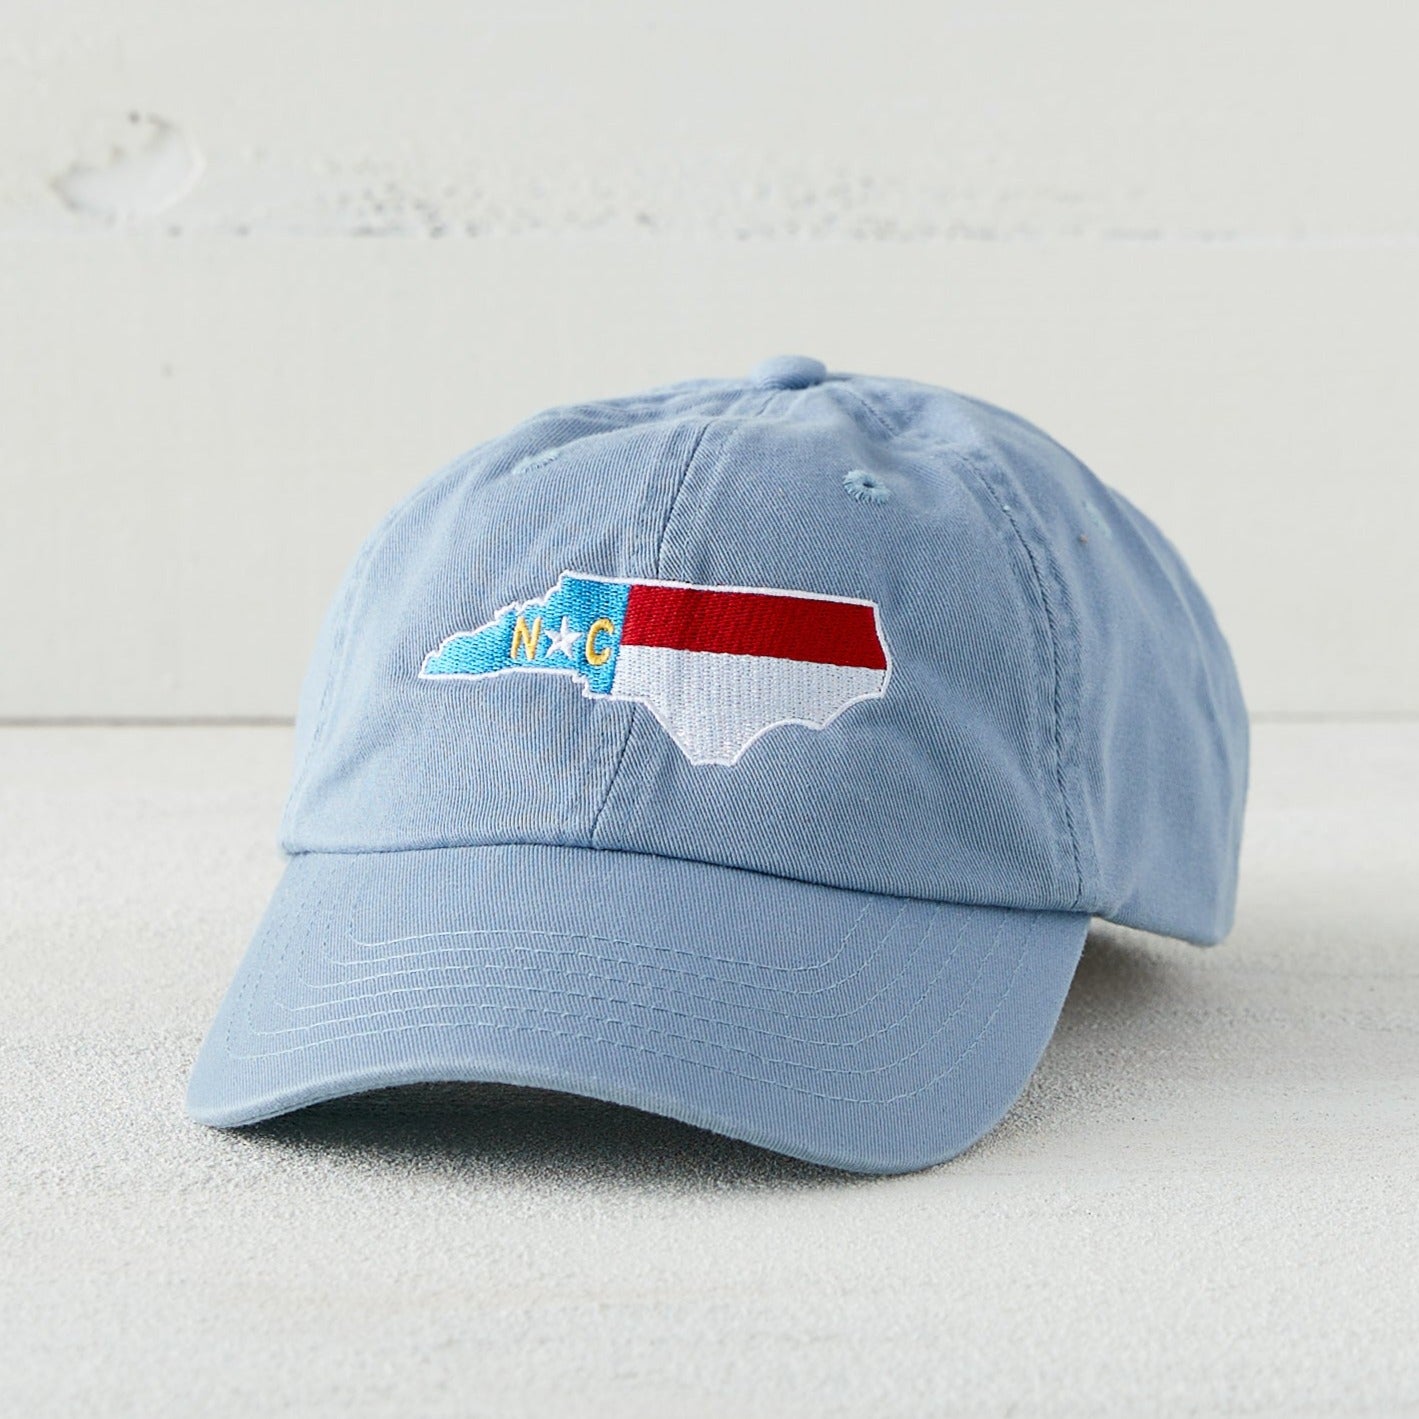 Classic North Carolina Blue Cap